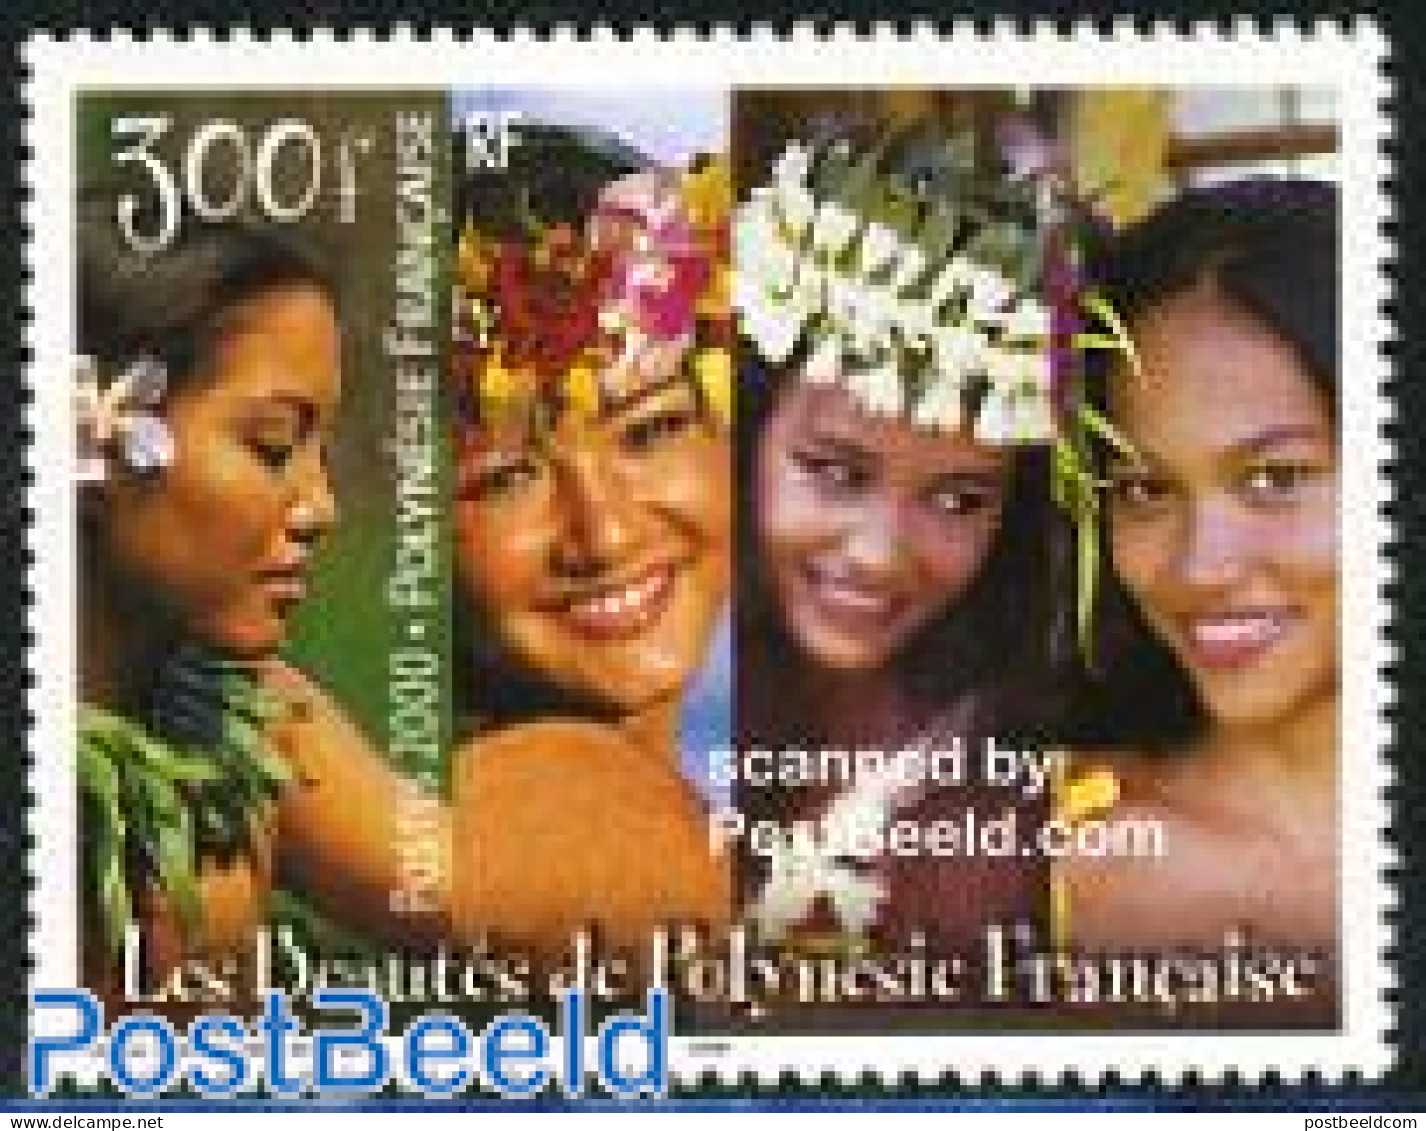 French Polynesia 2000 Polynesian Beauties 1v, Mint NH, History - Women - Ongebruikt